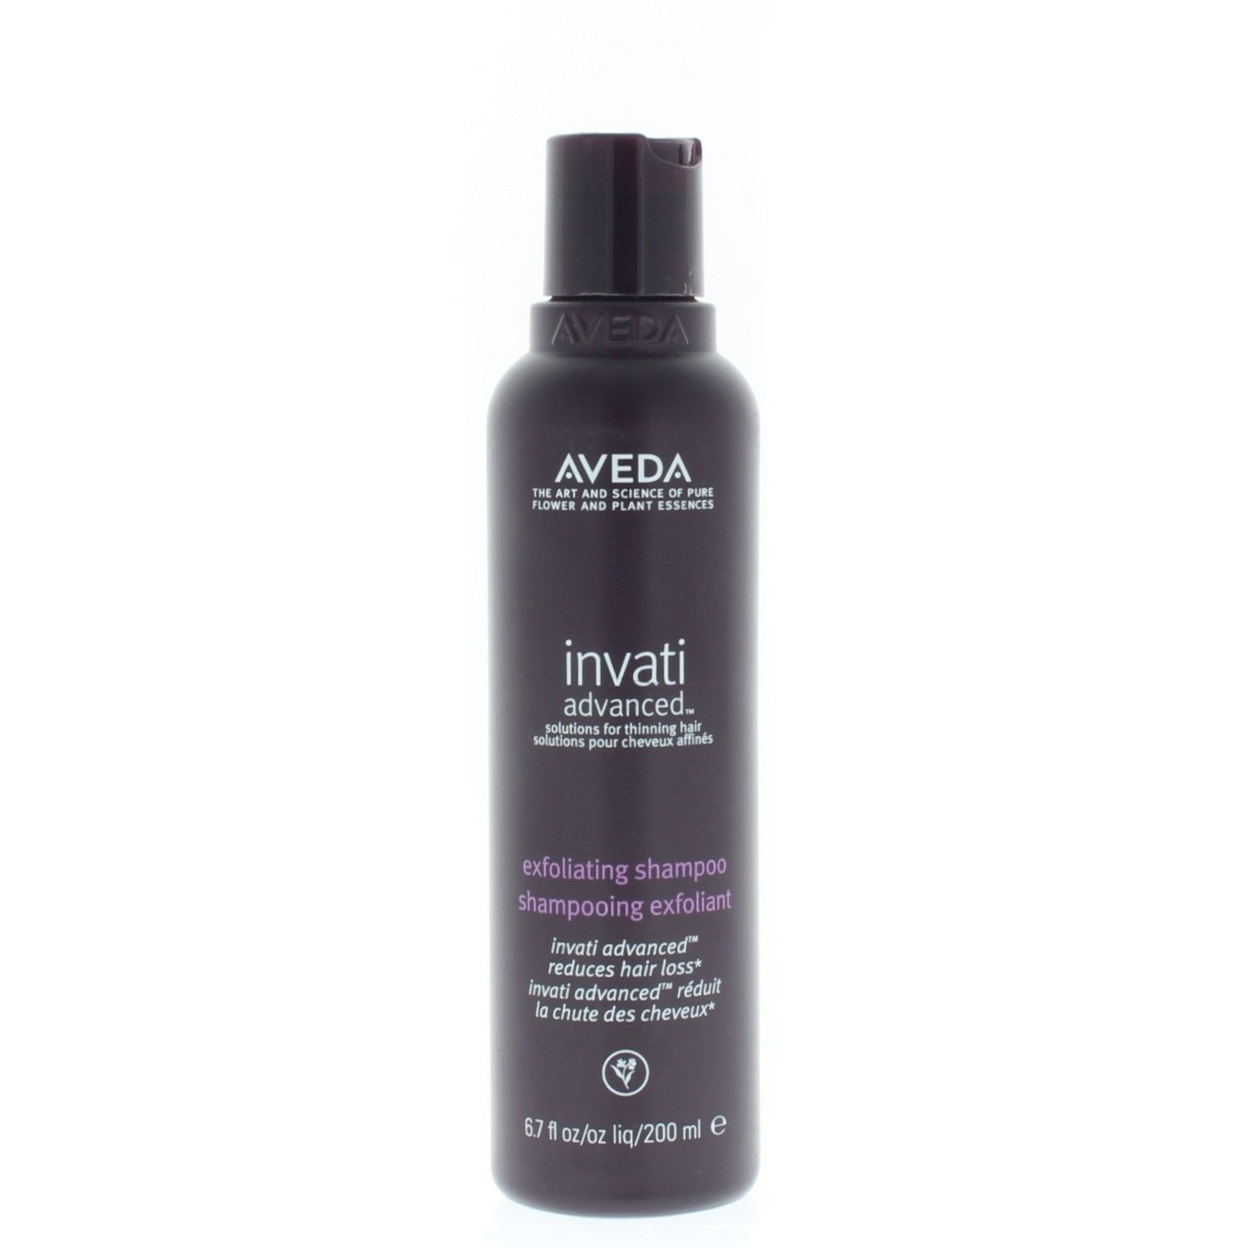 Aveda Invati Advanced Exfoliating Shampoo 6.7oz/200ml